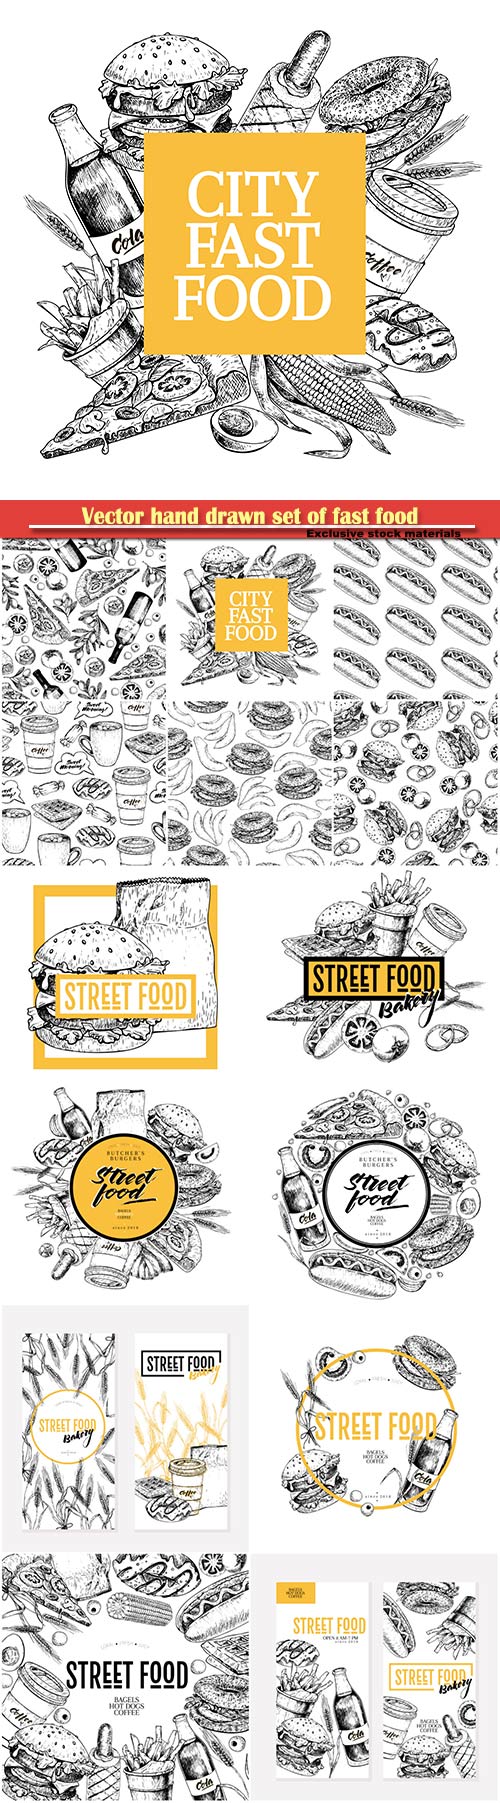 Vector hand drawn set of fast food, for restaurant, menu, street food, bake ...